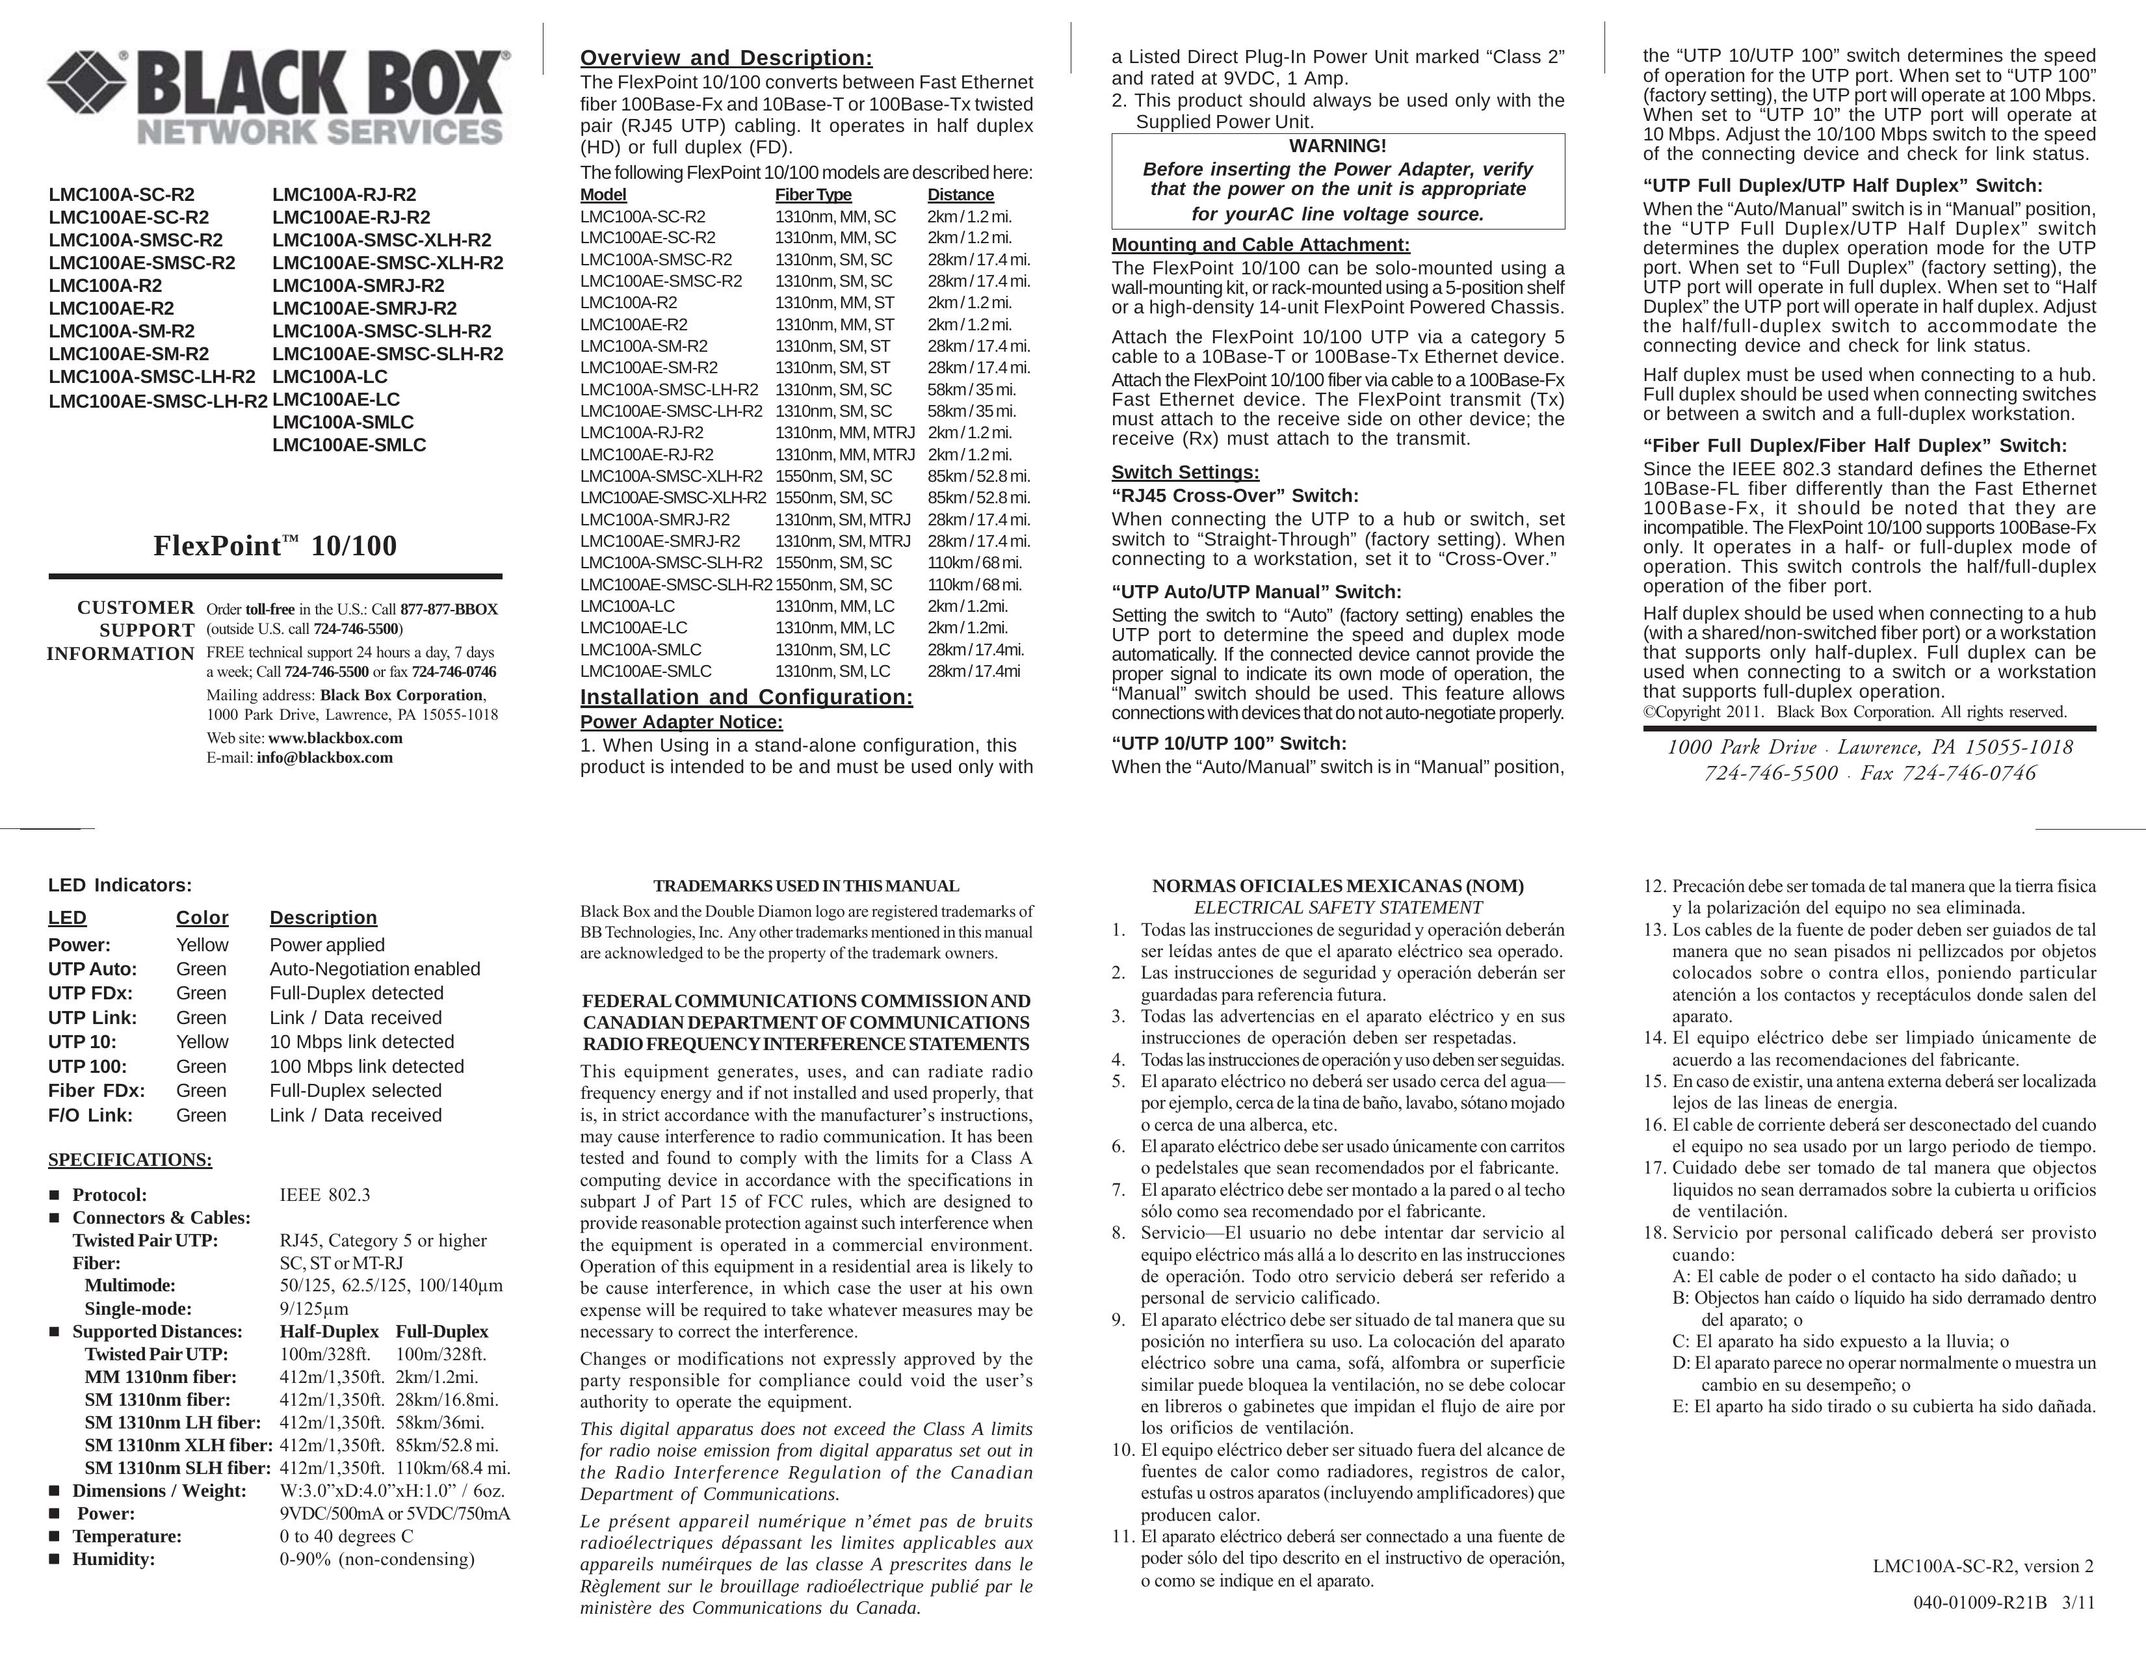 Black Box LMC100AE-SMLC Network Cables User Manual